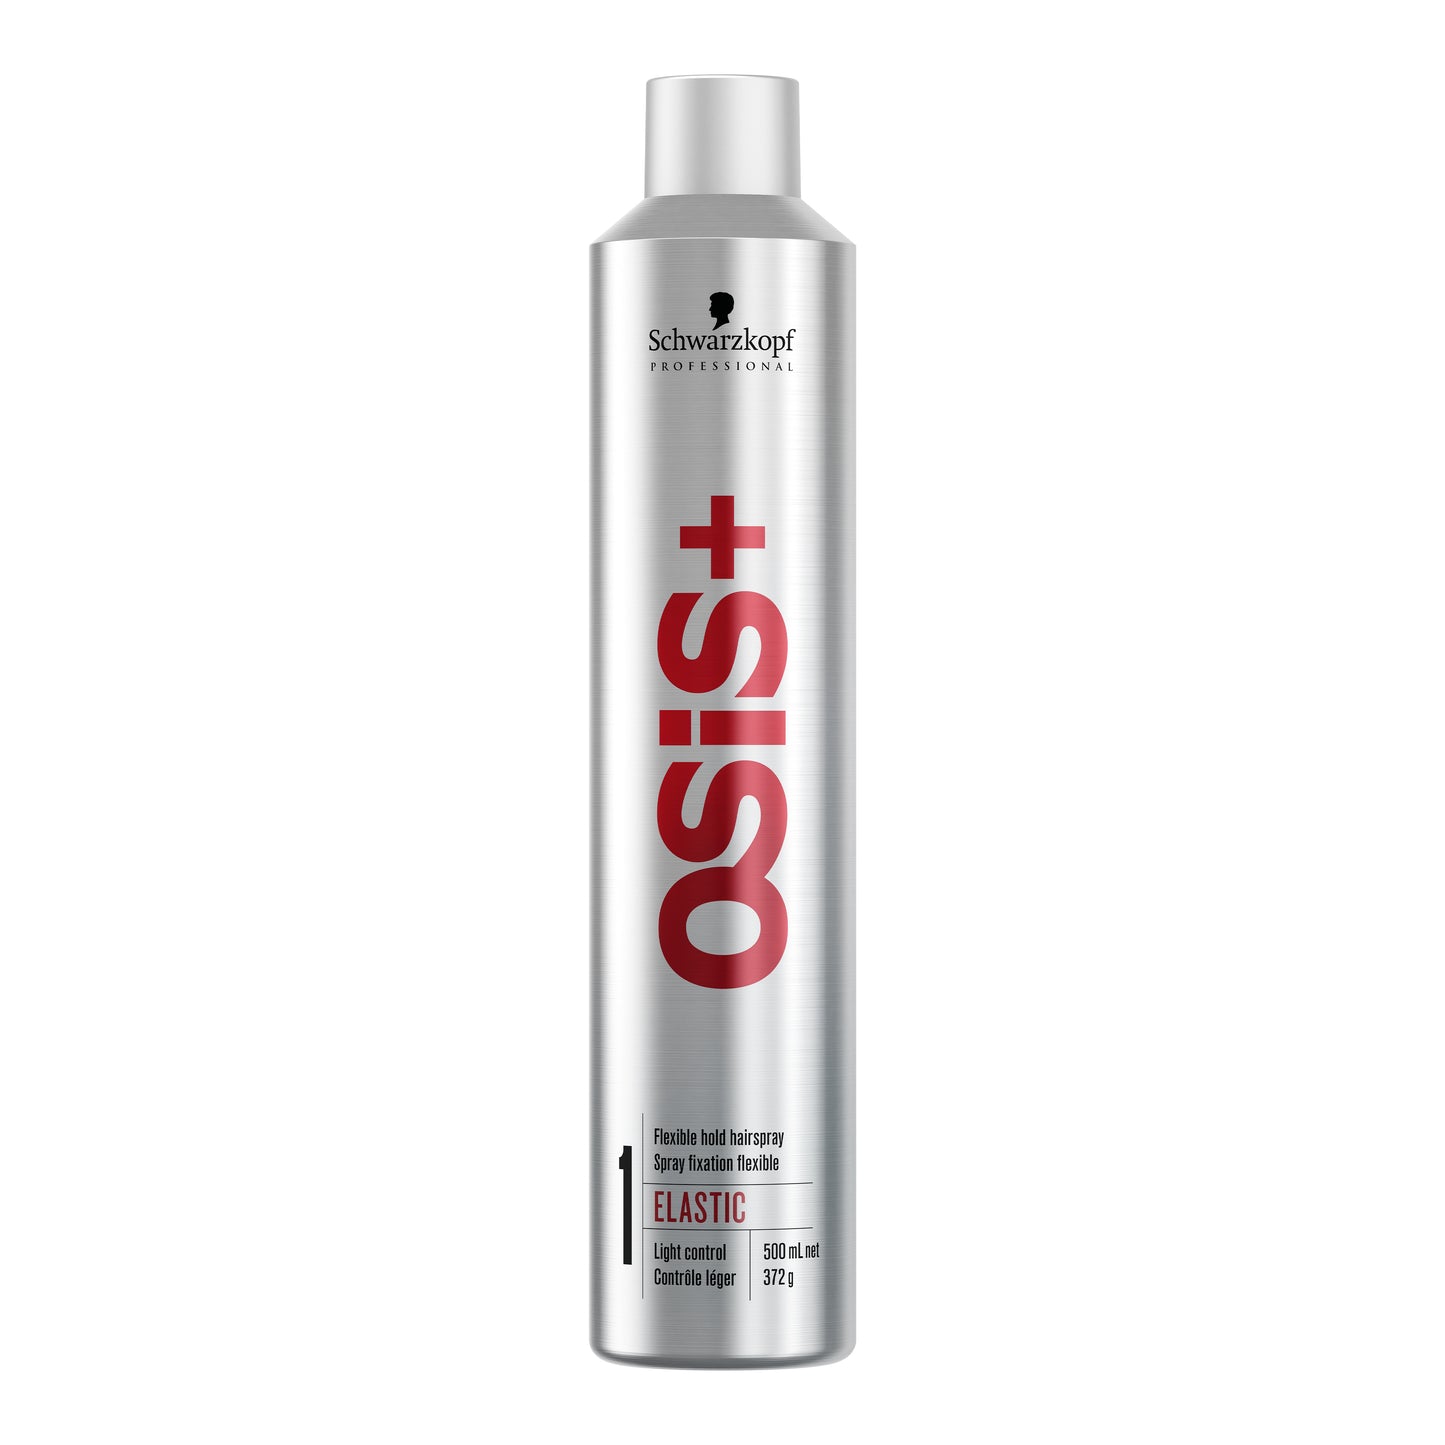 OSiS+ ELASTIC XXL Flexible Hold Hairspray, 500mL